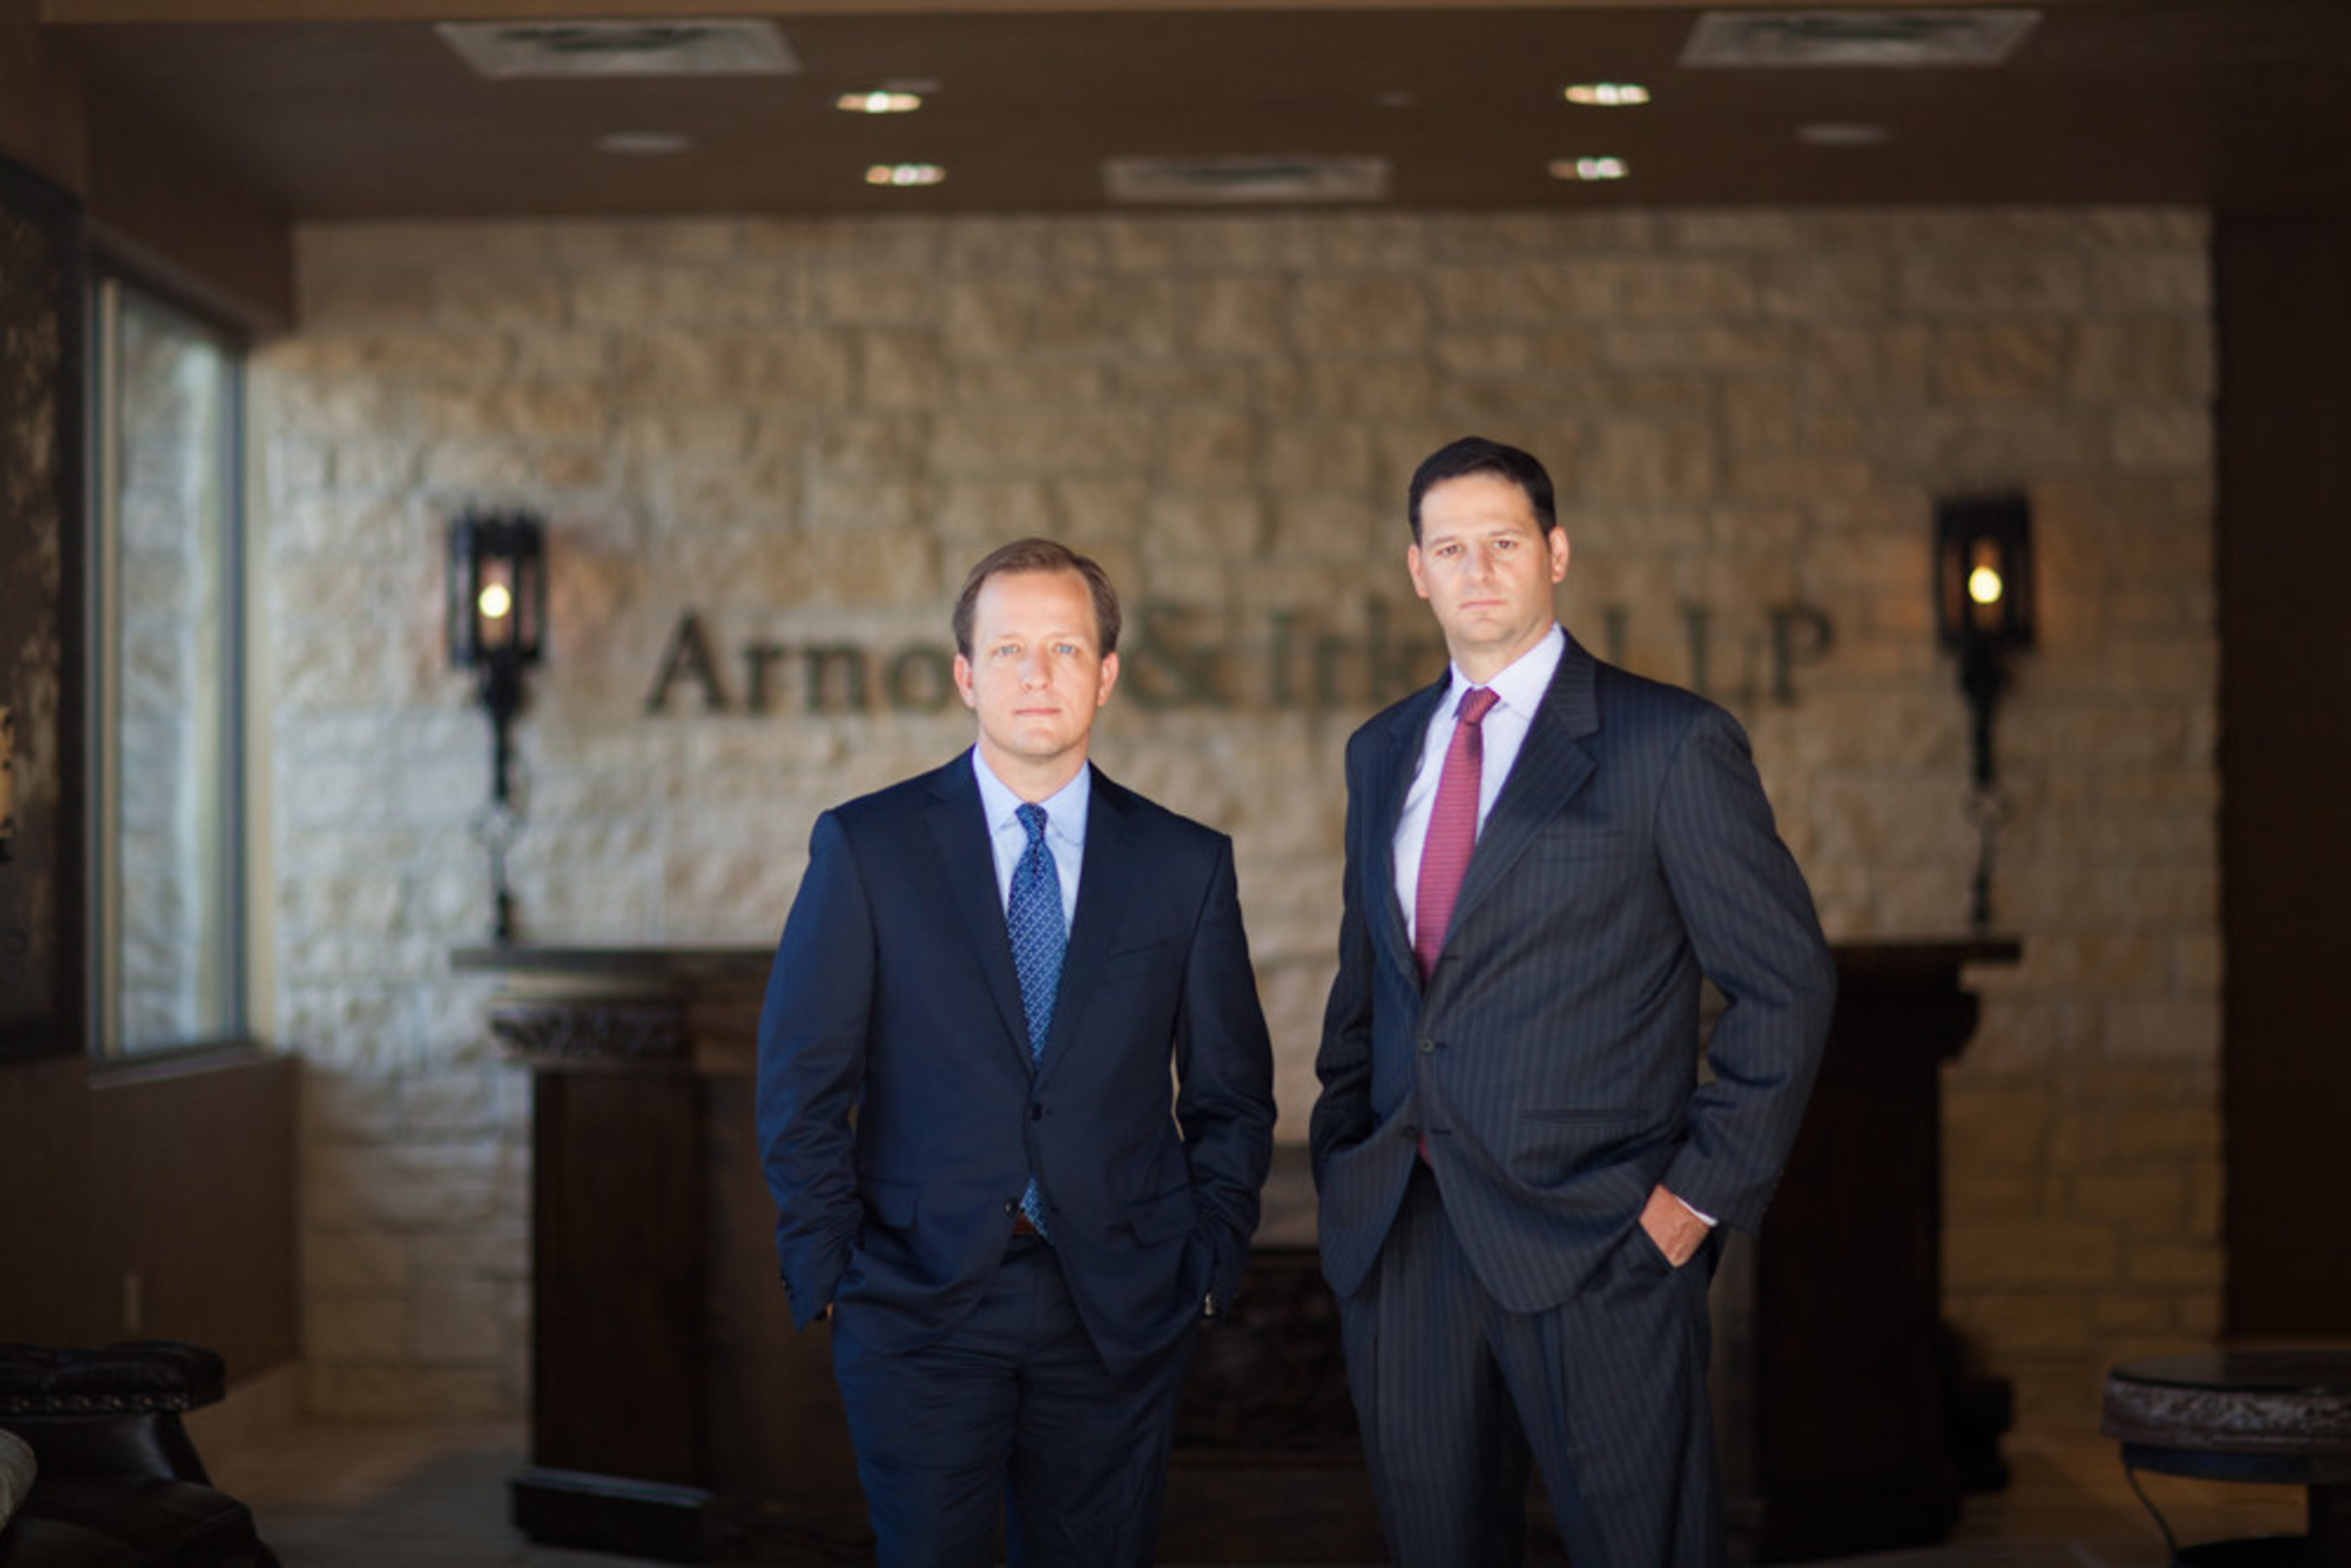 Attorneys Kurt Arnold and Jason Itkin of Arnold & Itkin LLP.